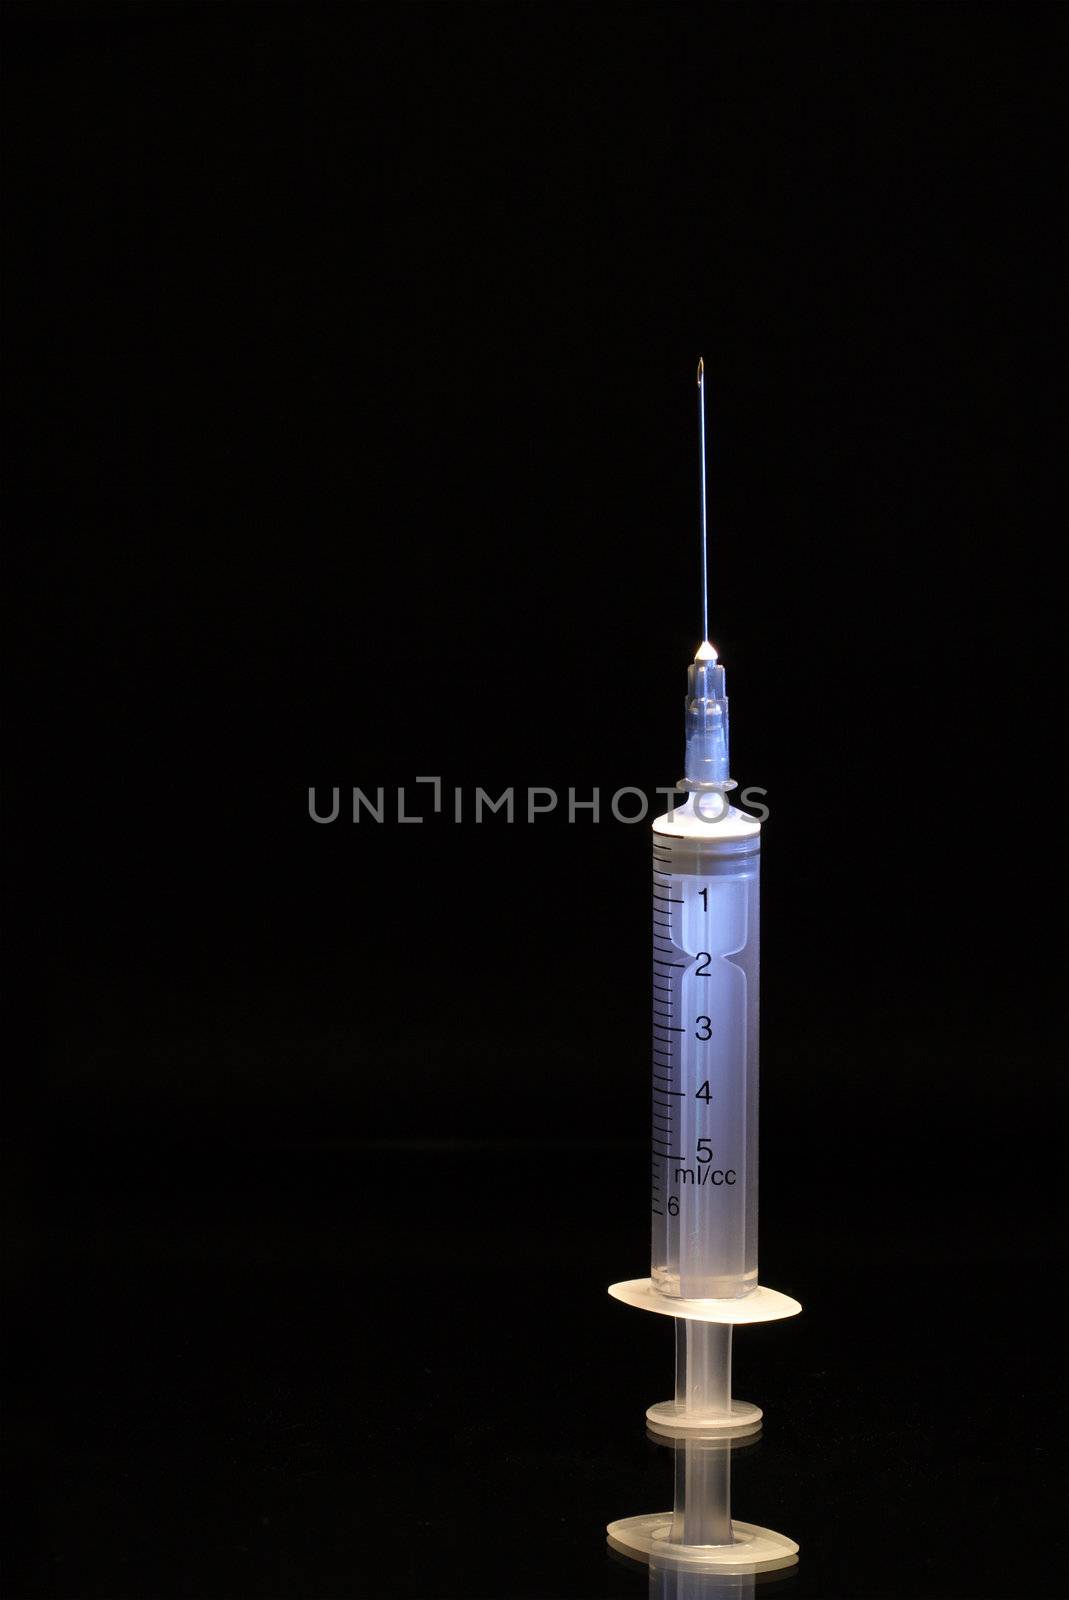 Syringe by kvkirillov